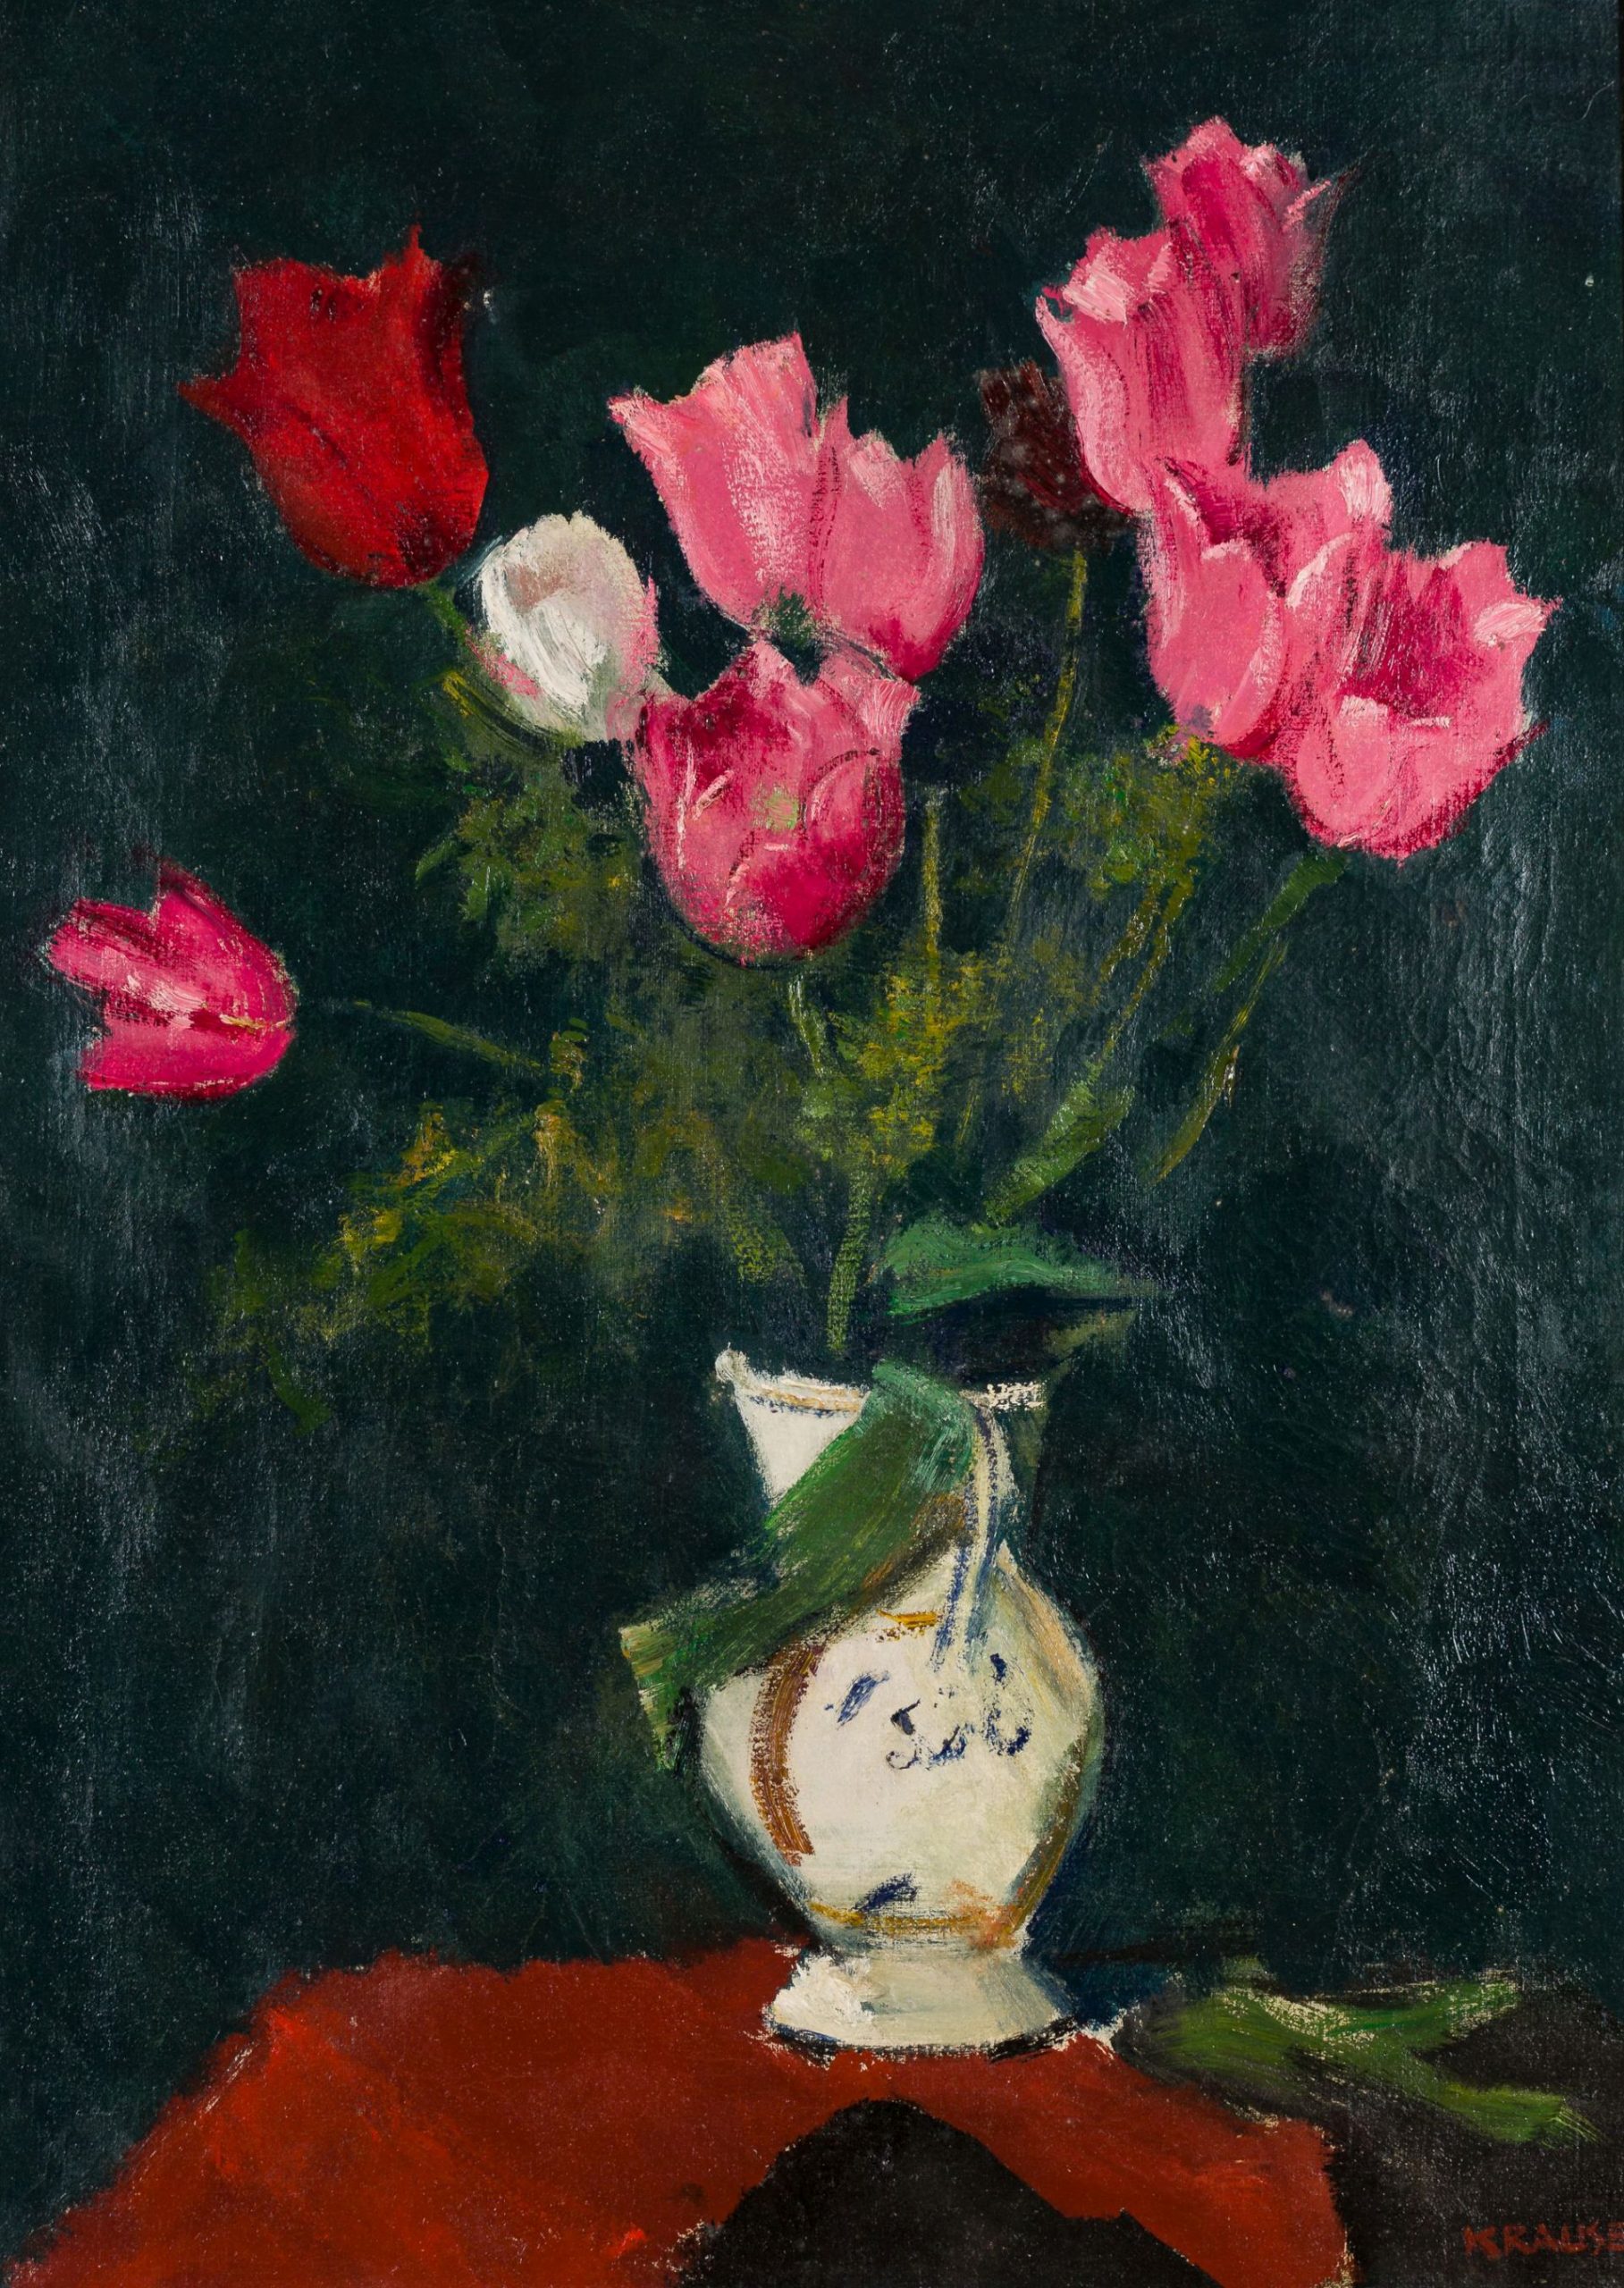 Krause Heinrich-Still life with Tulips